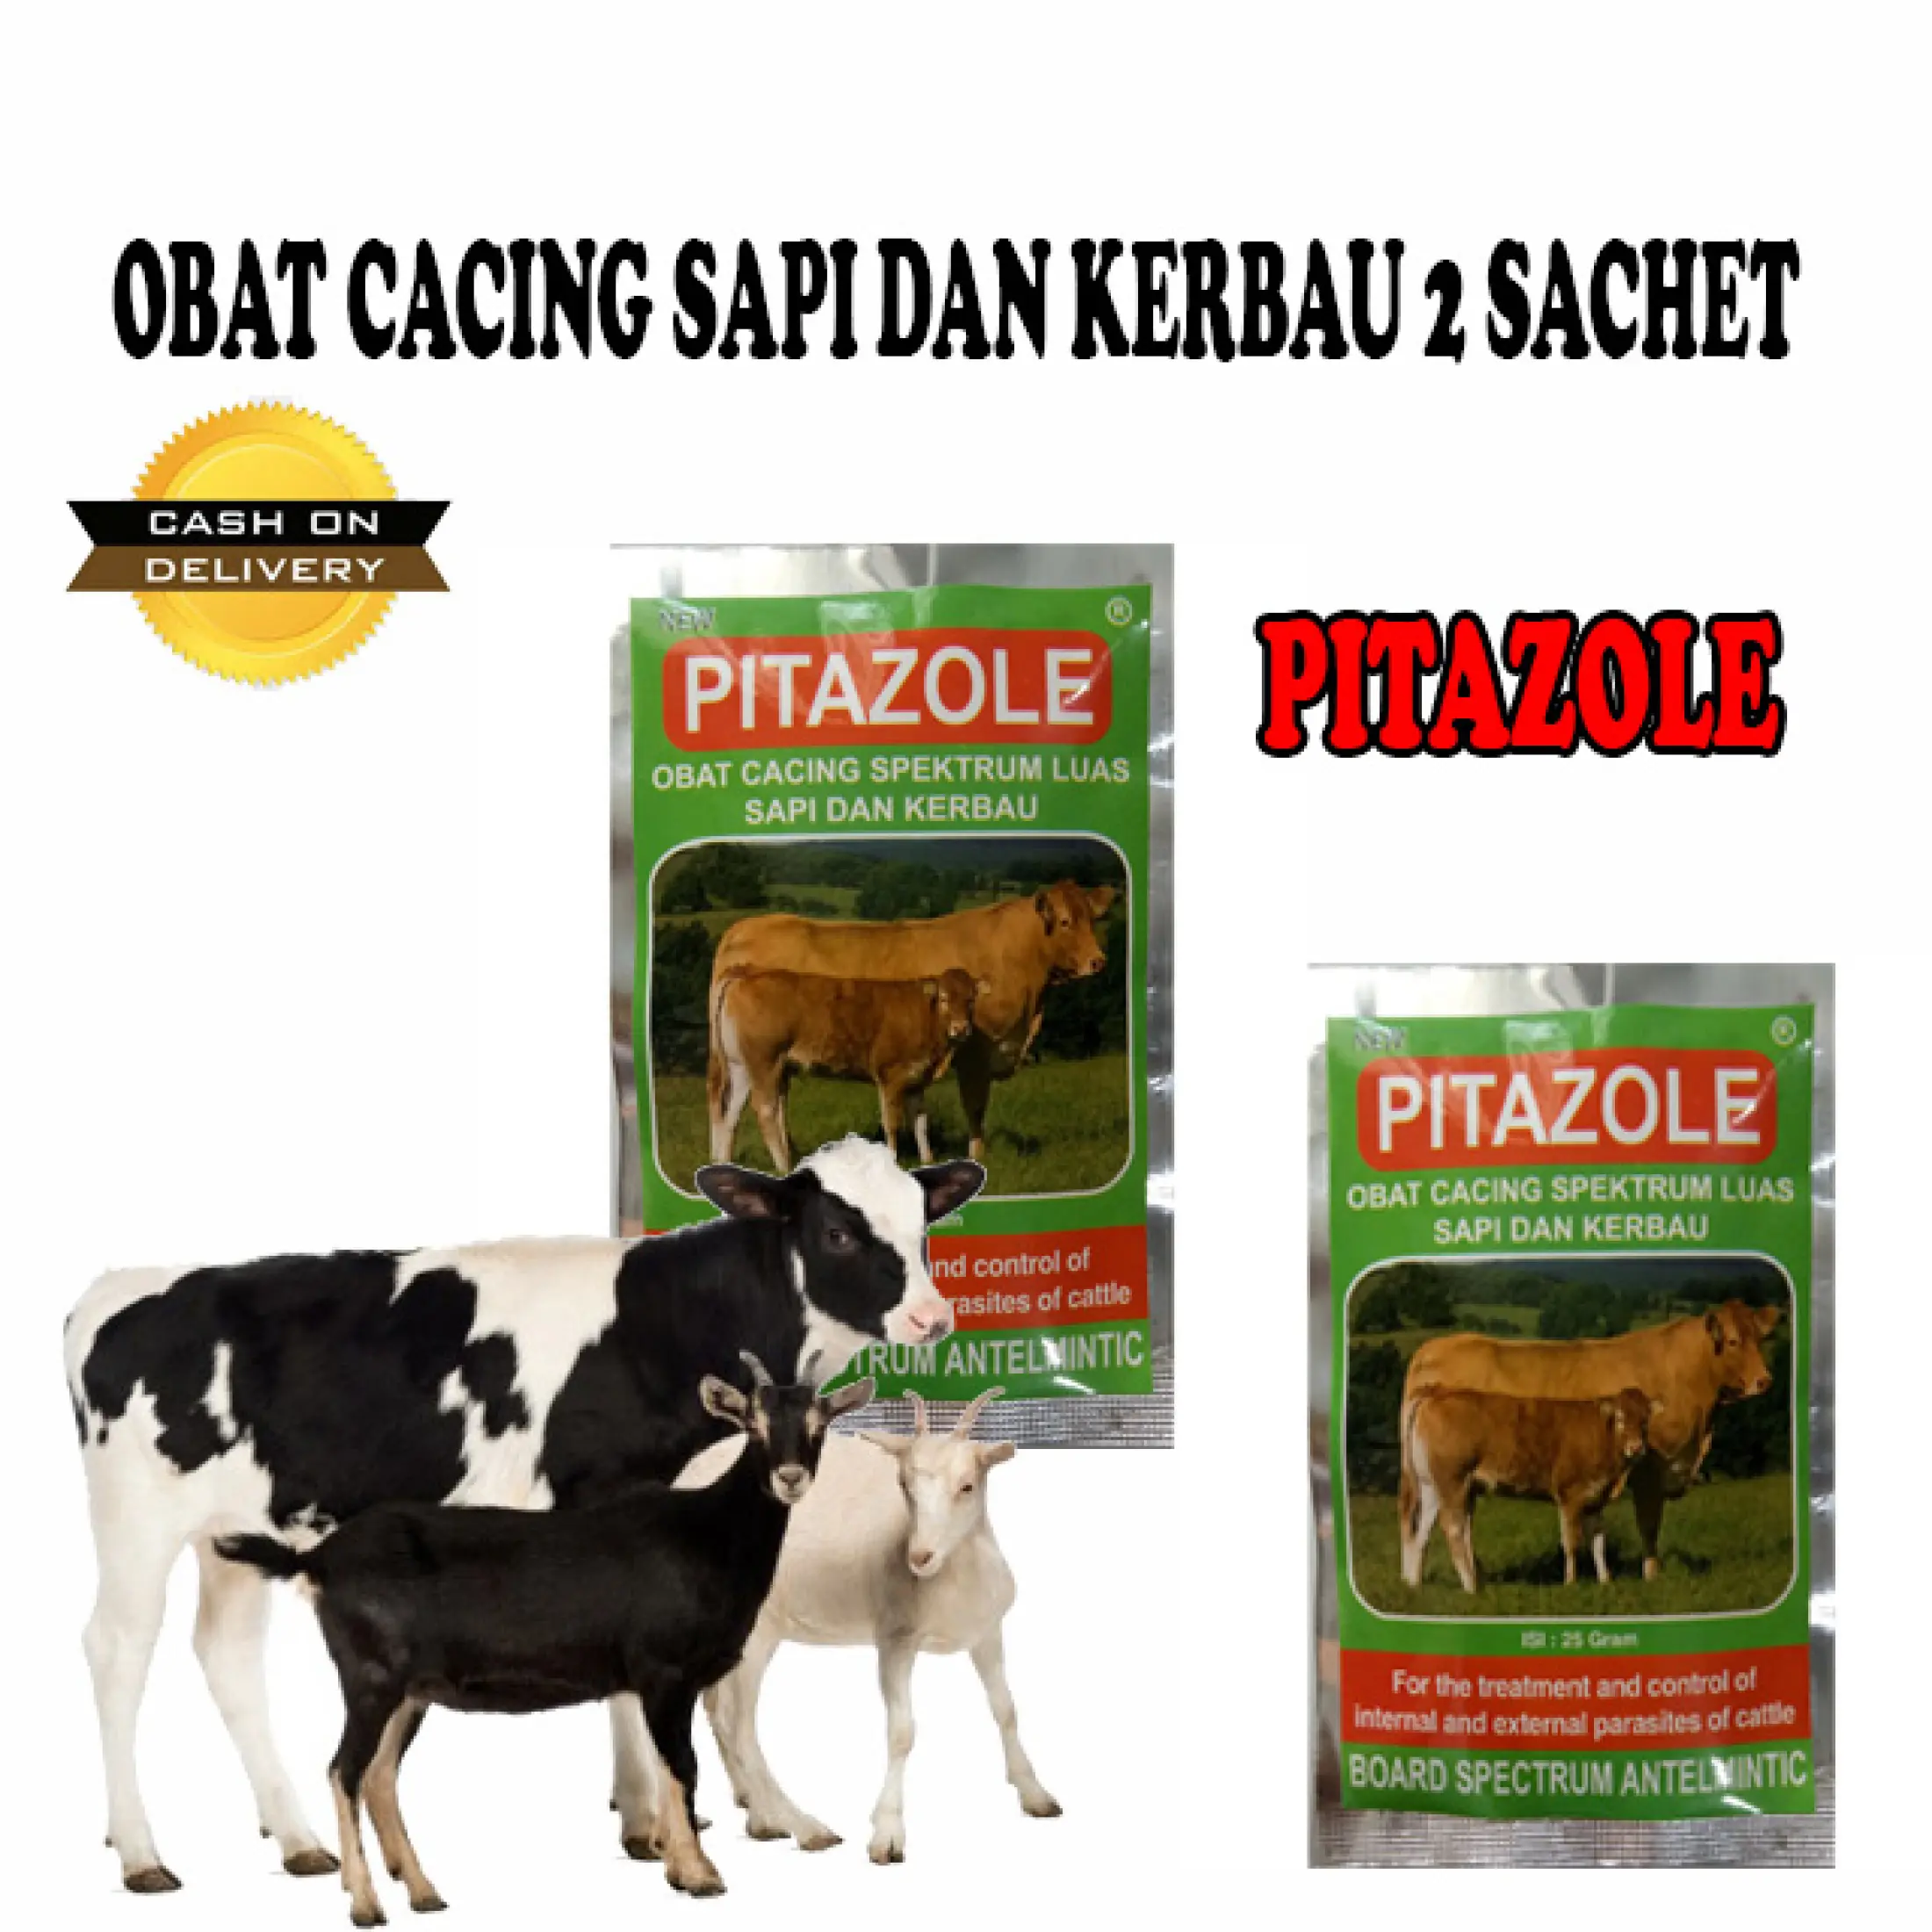 Obat Cacing Sapi Dan Kerbau Pitazole 2 Sachet Lazada Indonesia